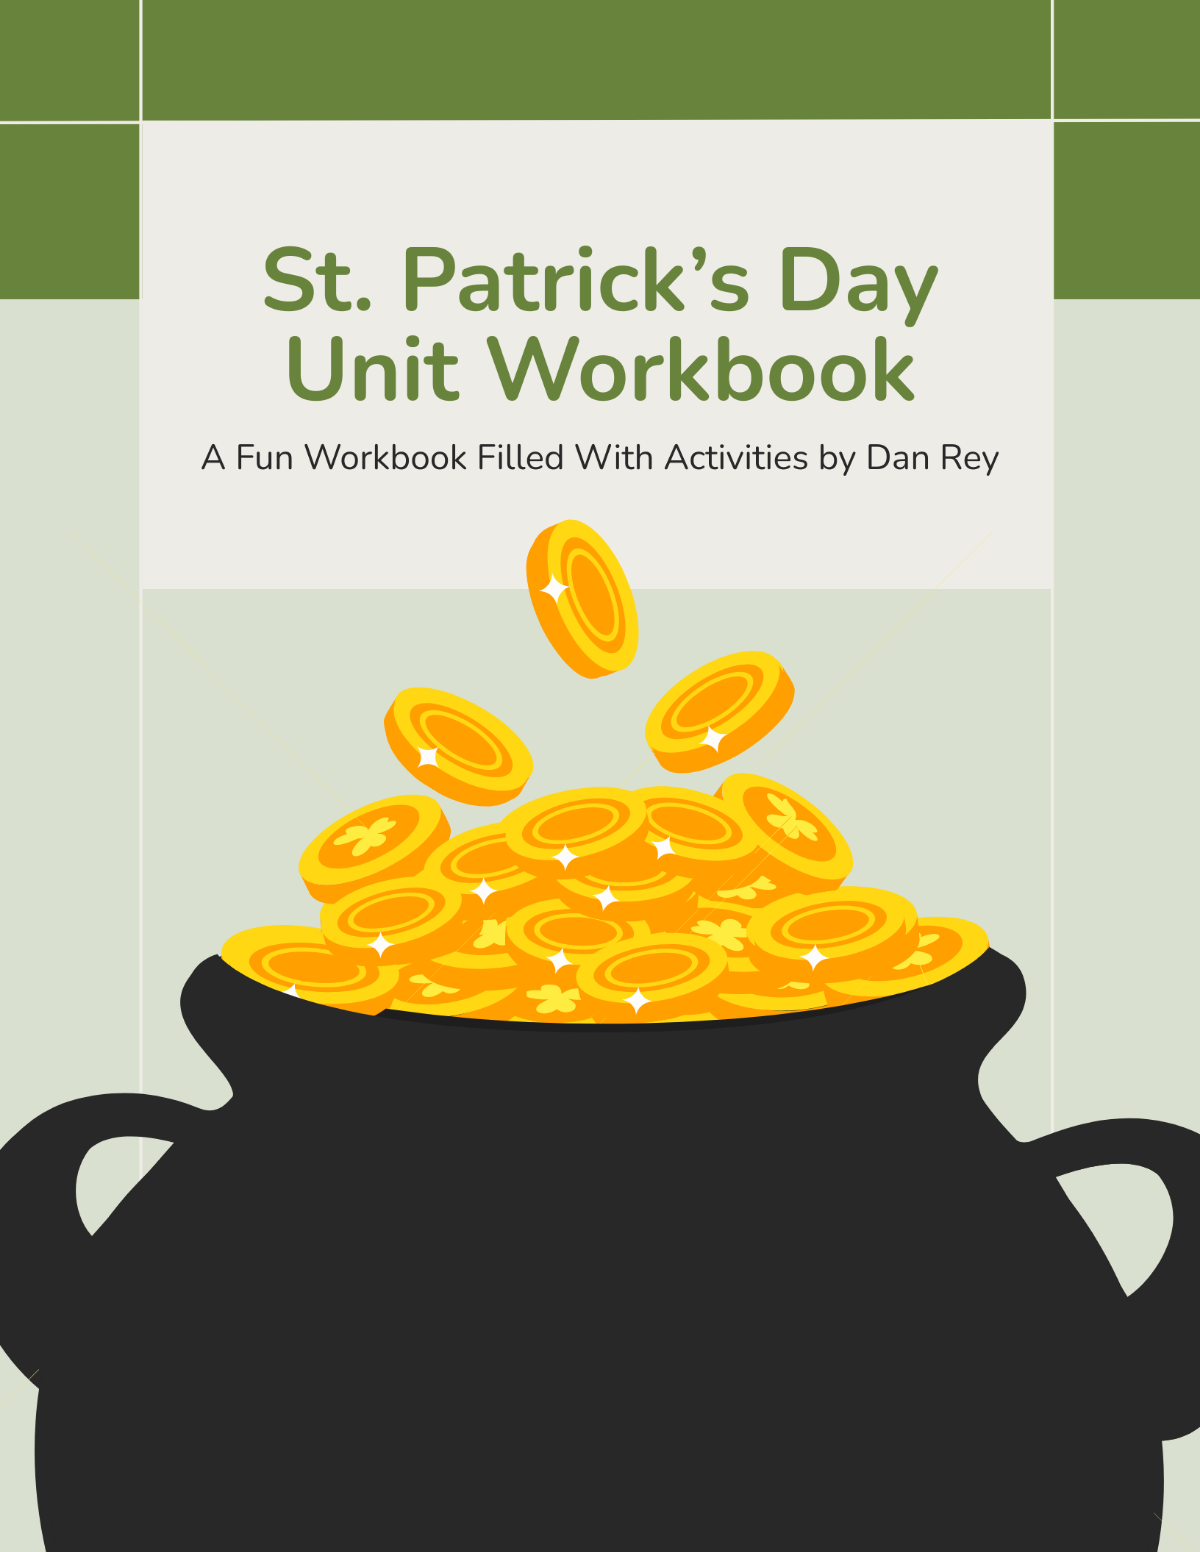 St. Patrick's Day Unit Workbook Template